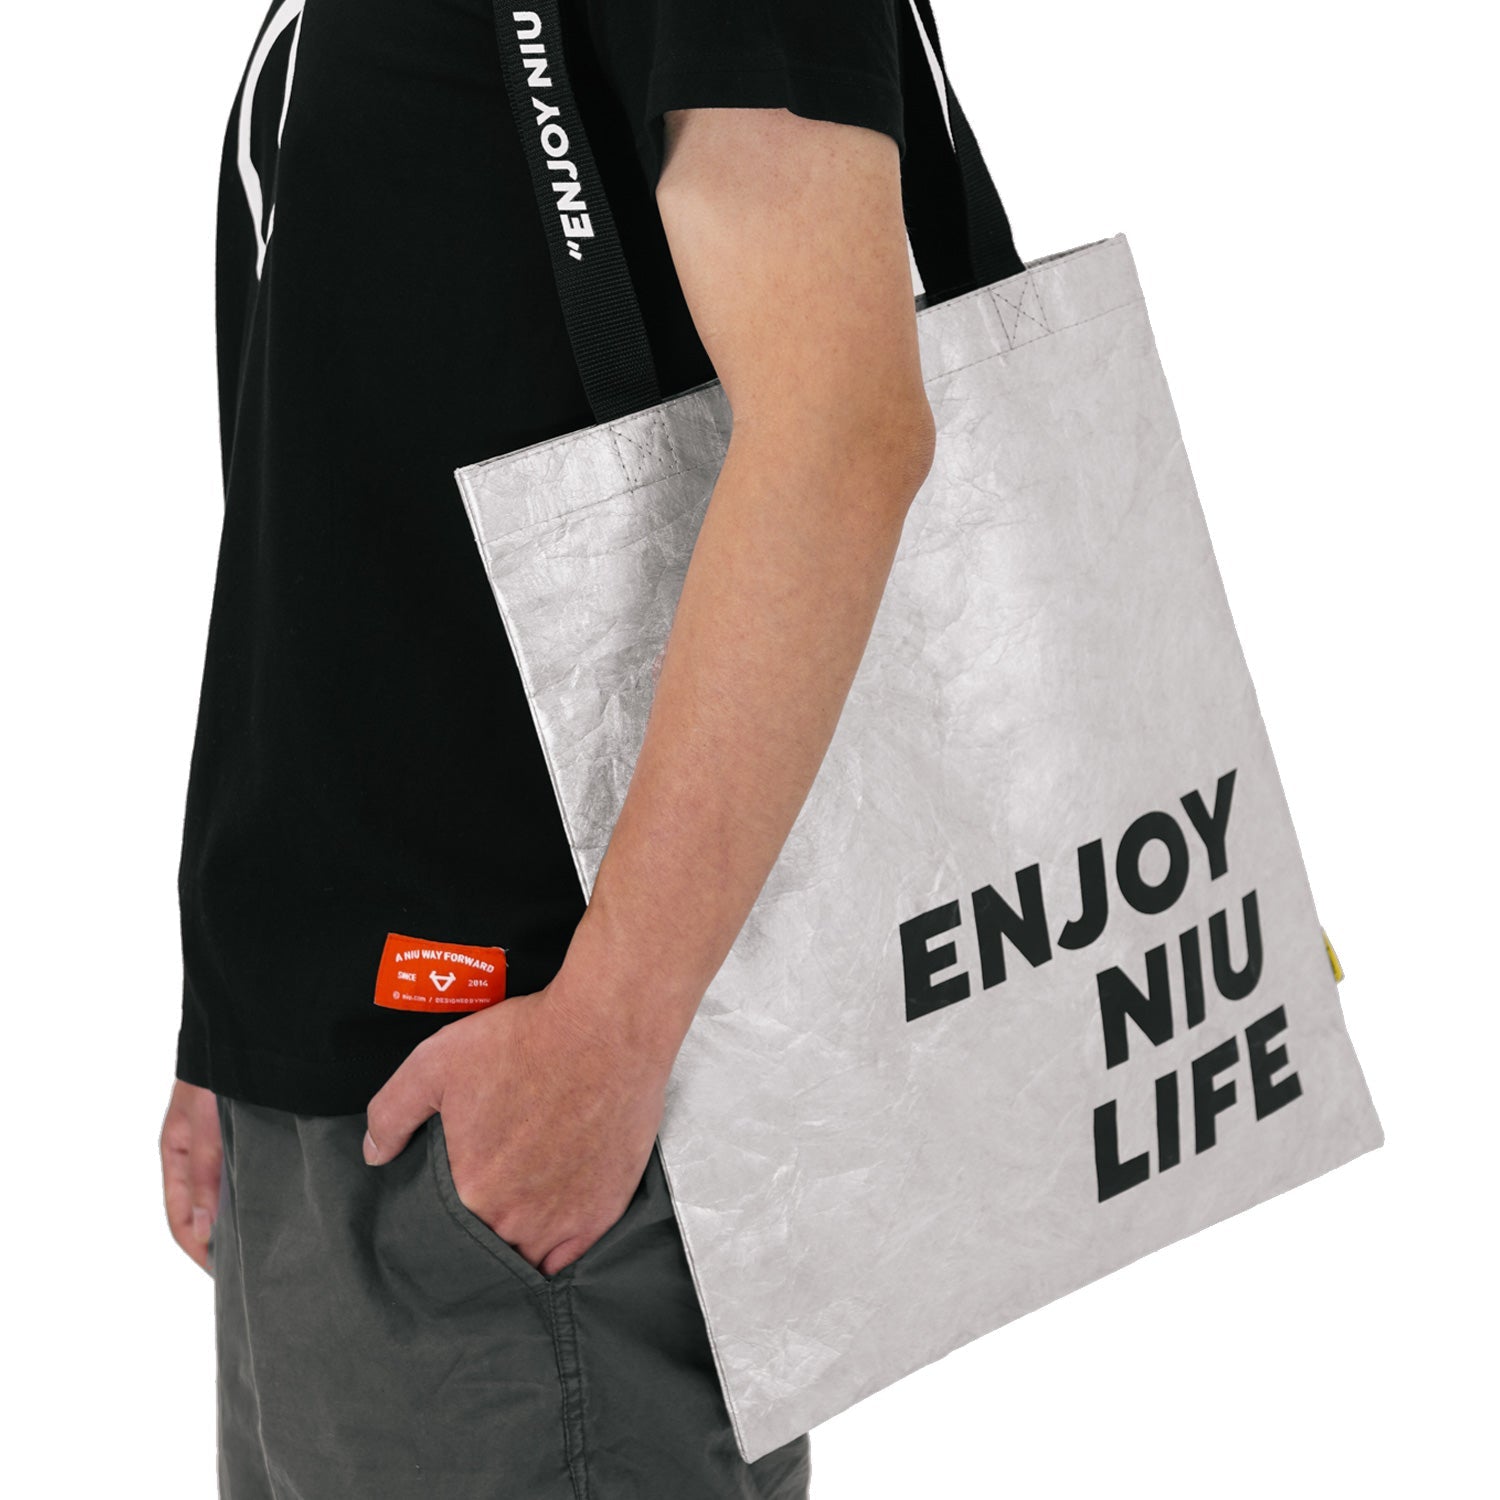 NIU "ENJOY NIU LIFE" DuPont Paper Shopping Bag